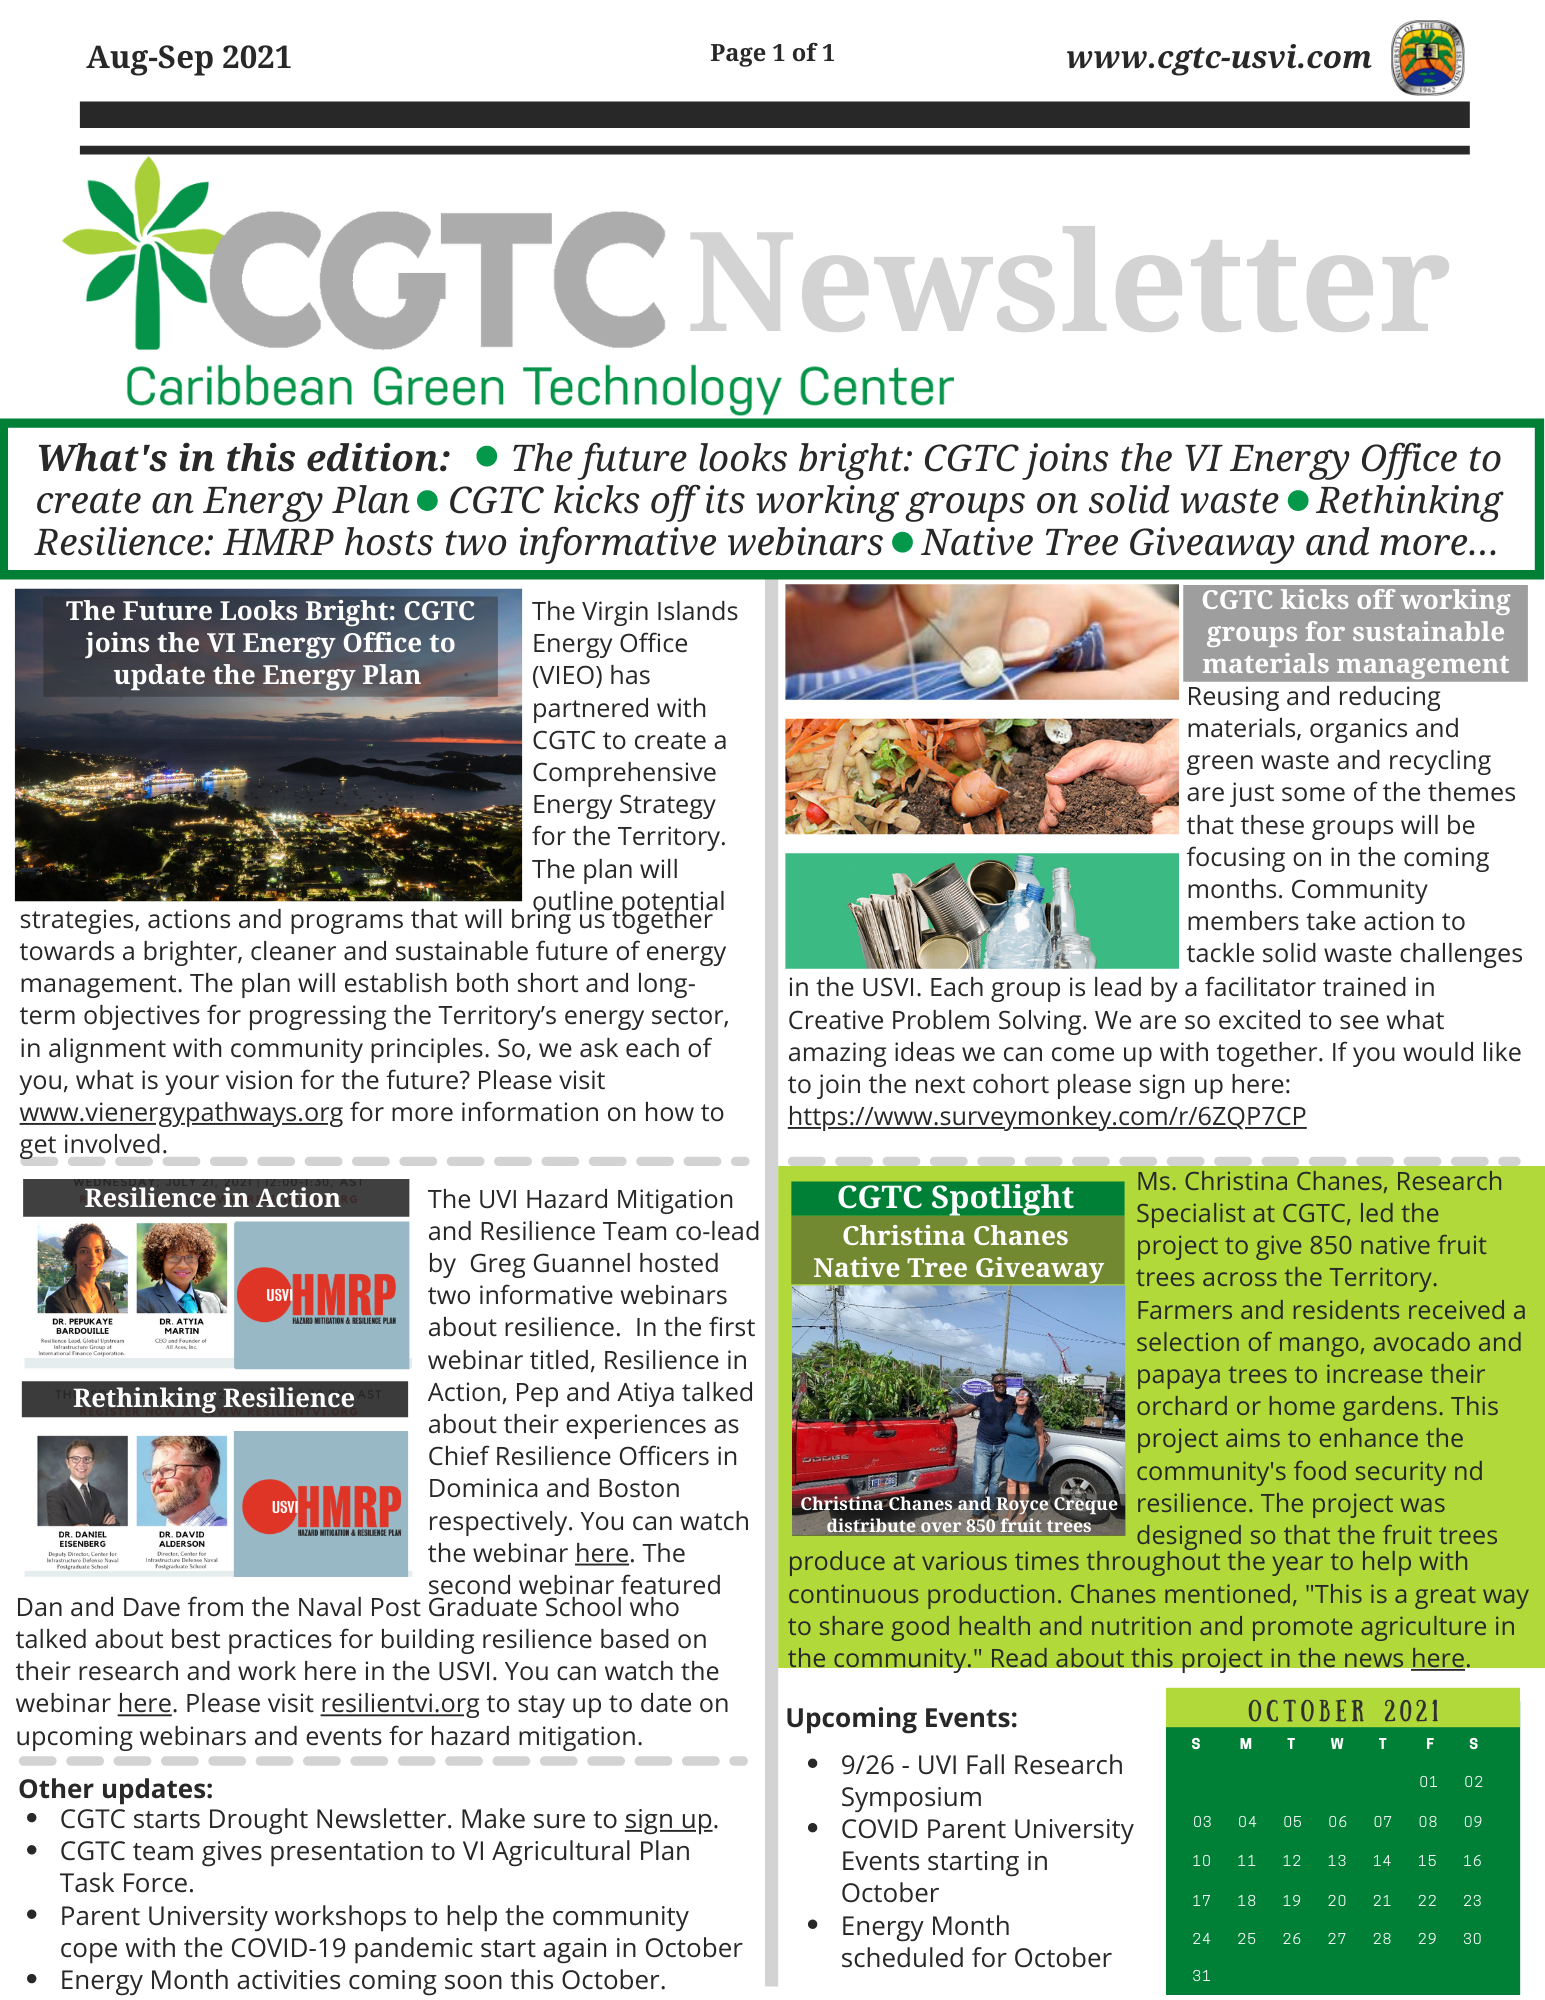 CGTC Newsletter Aug-Sep 2021